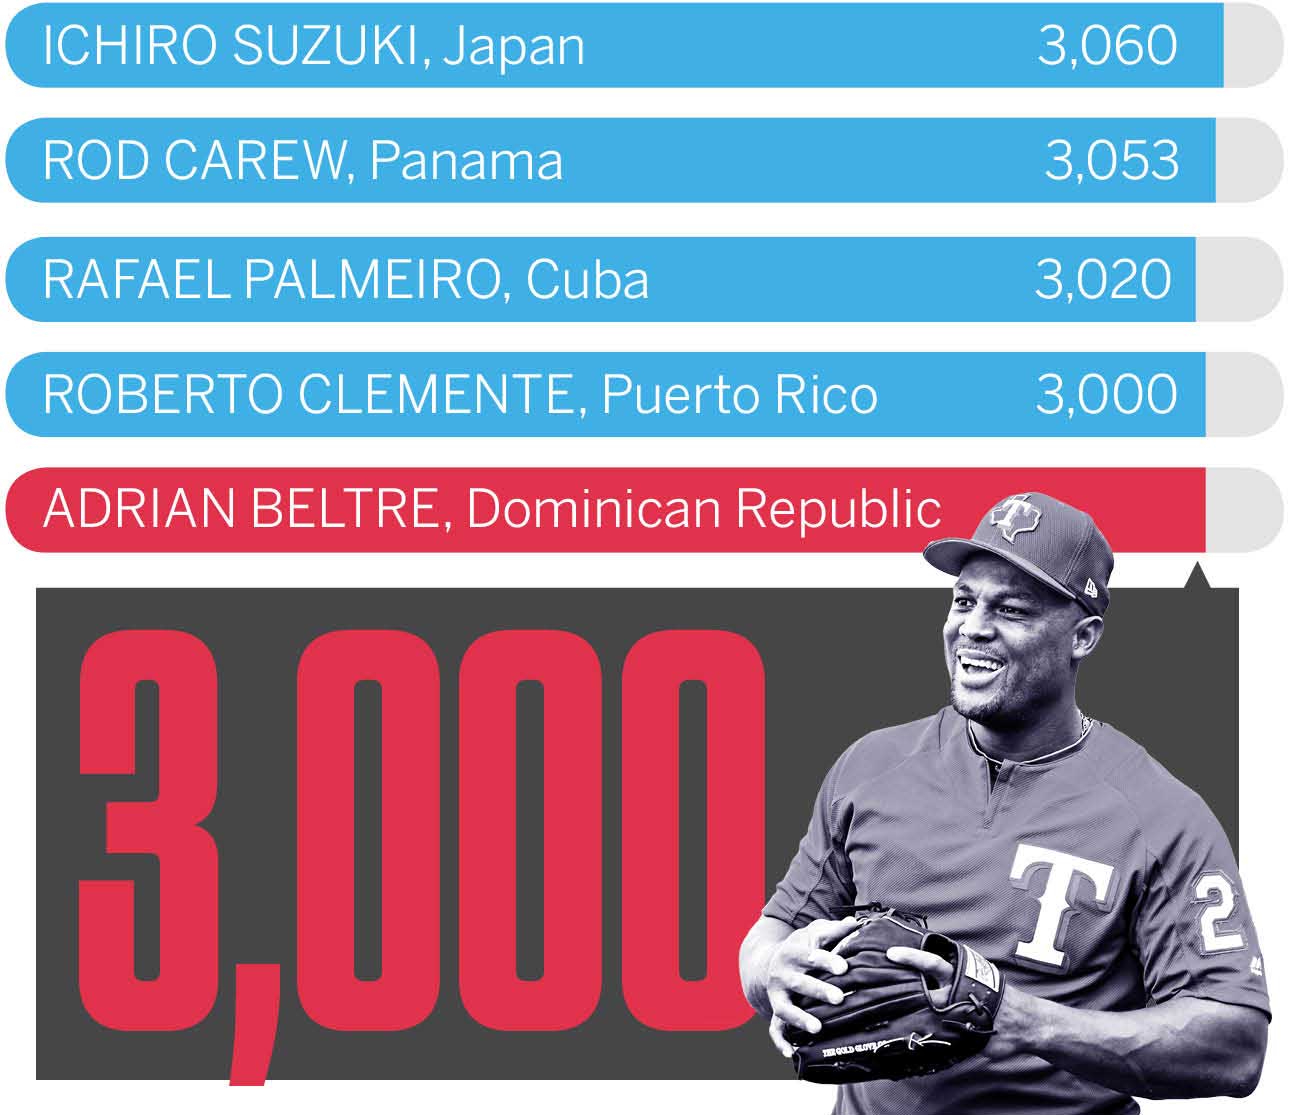 A graphic look at Texas Rangers star Adrián Beltré's historic